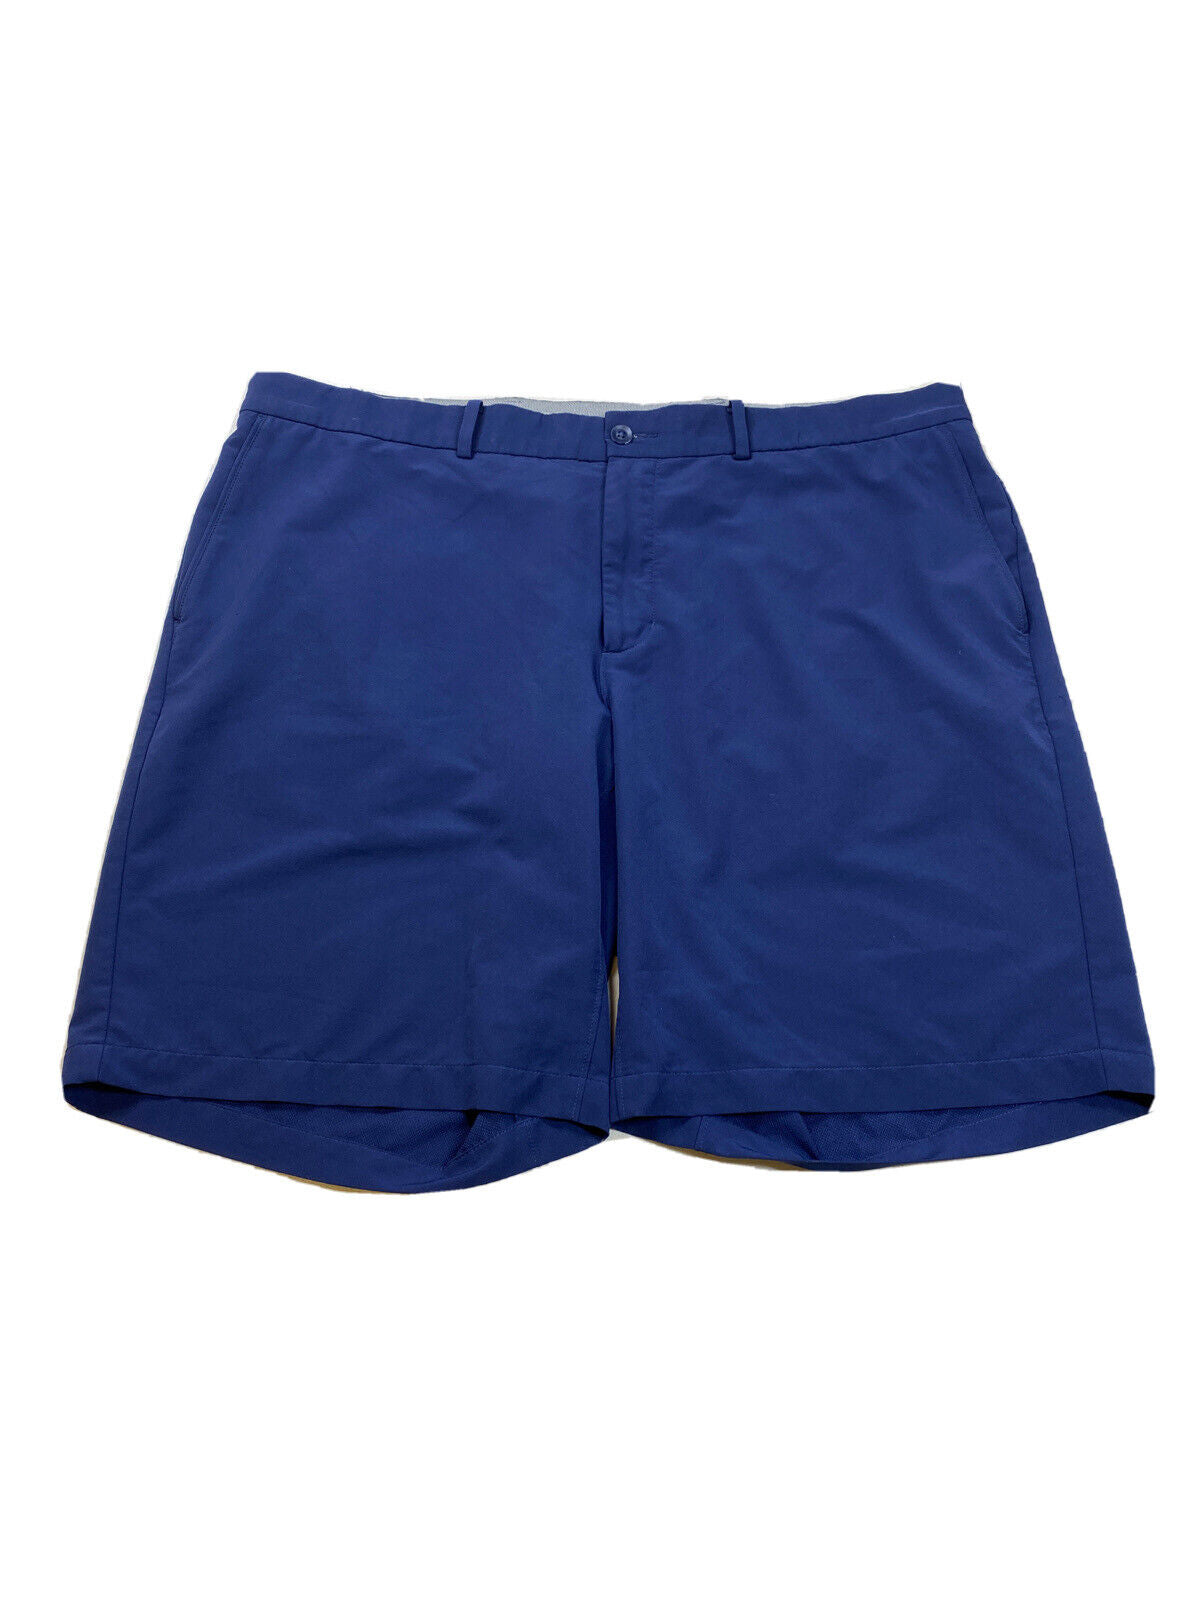 Nike Pantalones cortos de golf de poliéster Dri-Fit azul marino para hombre - 40